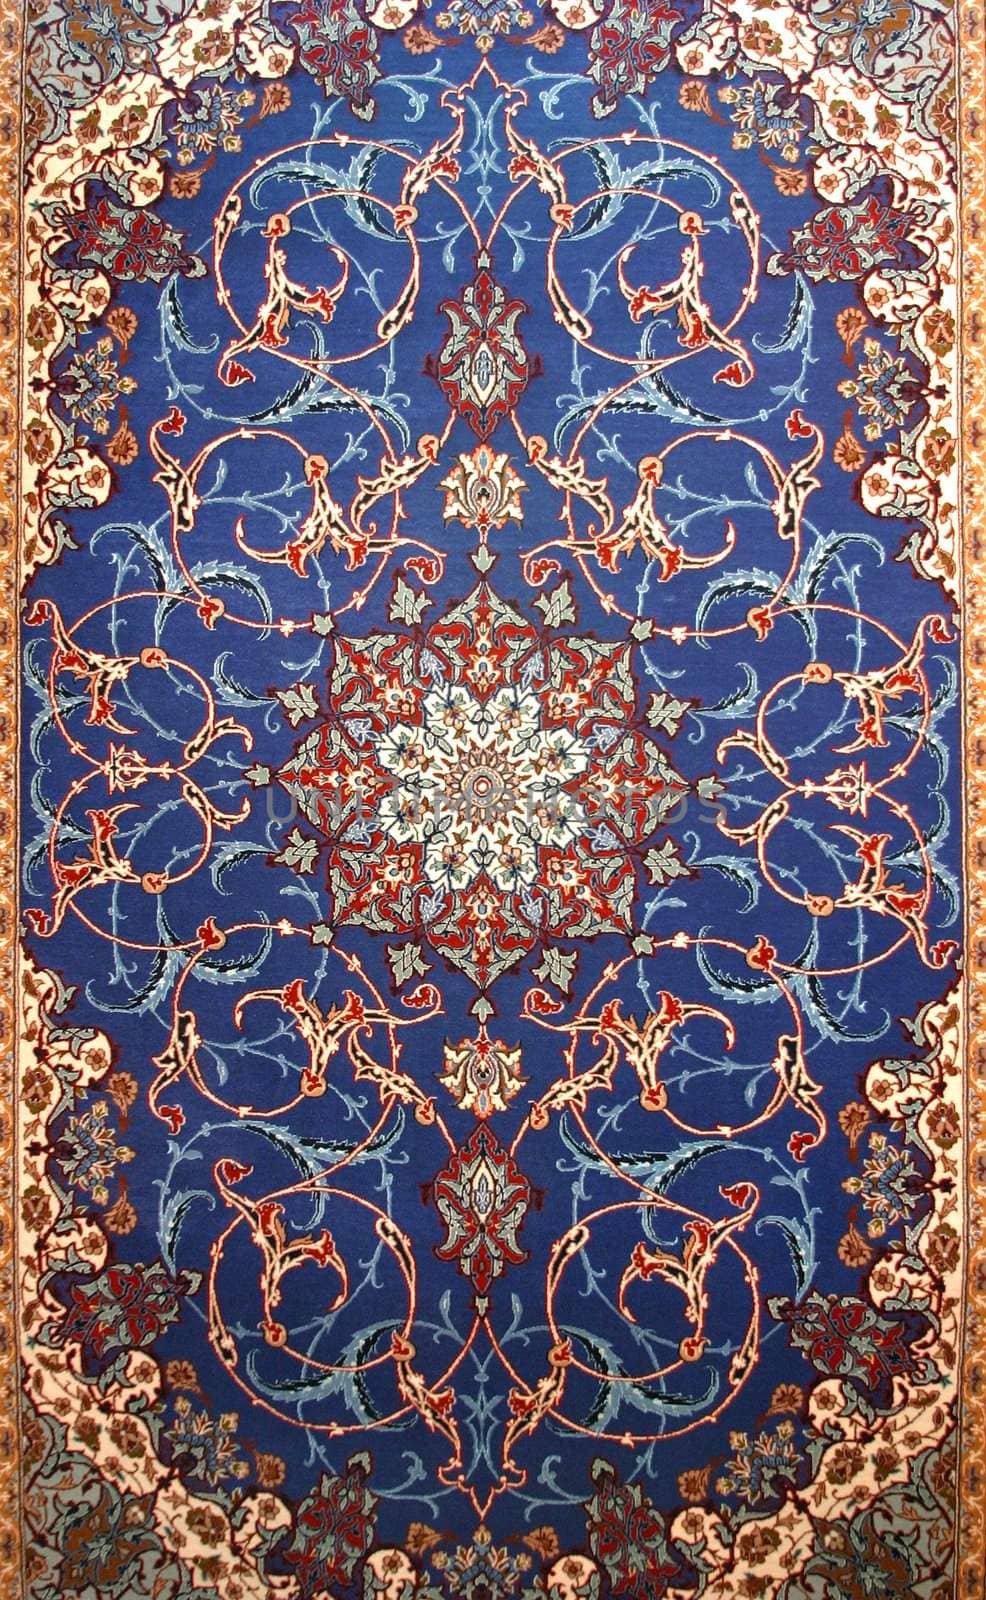 A fine textured classic persian carpet